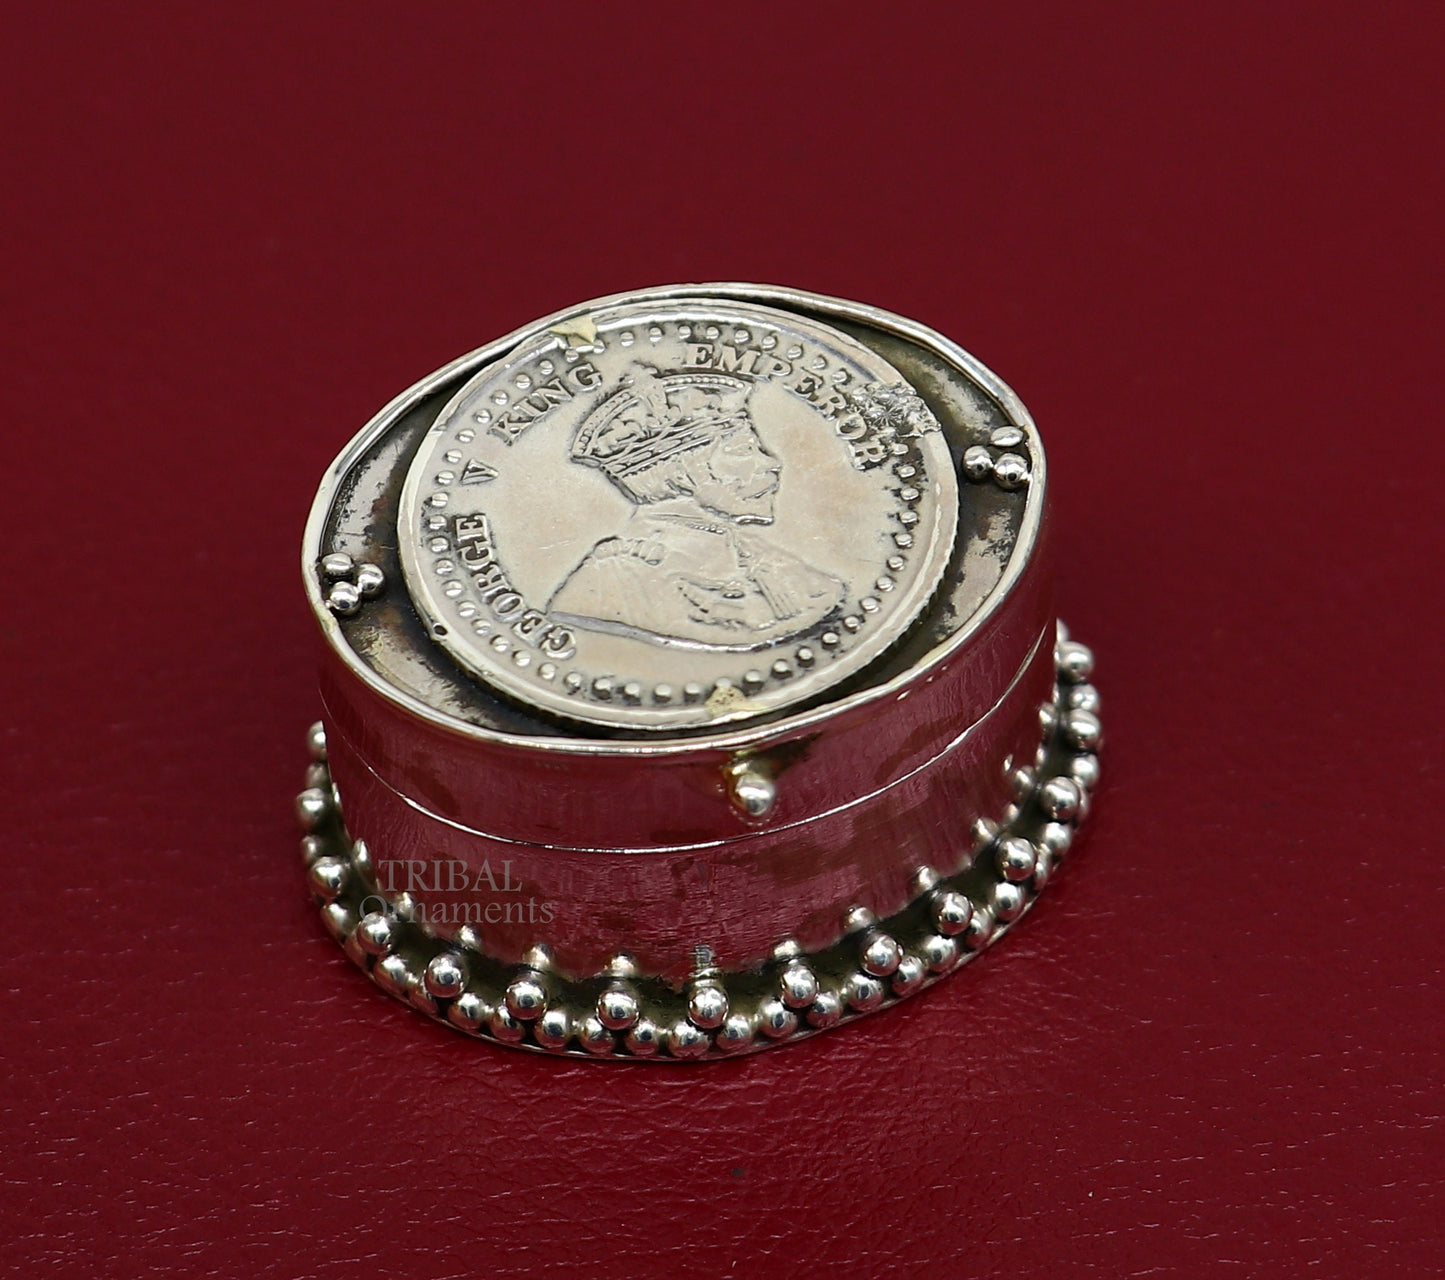 925 sterling silver unique design George v king emperor coin trinket box, kajal eyeliner box, Sindur box brides gift silver box stb763 - TRIBAL ORNAMENTS